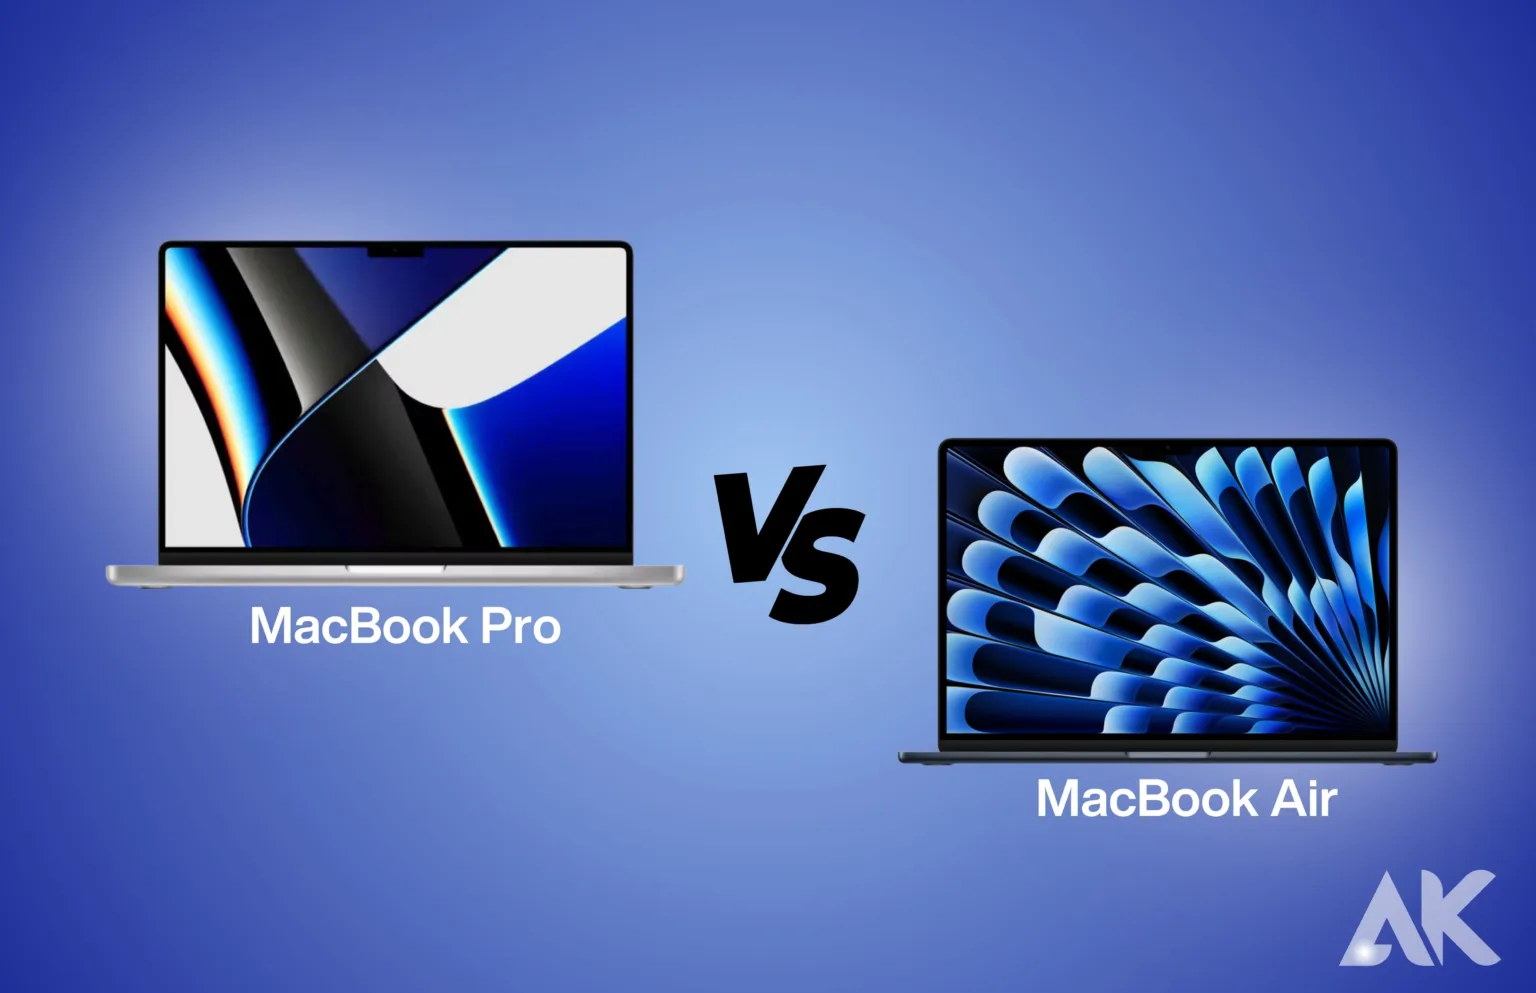 MacBook Pro vs MacBook Air comparison